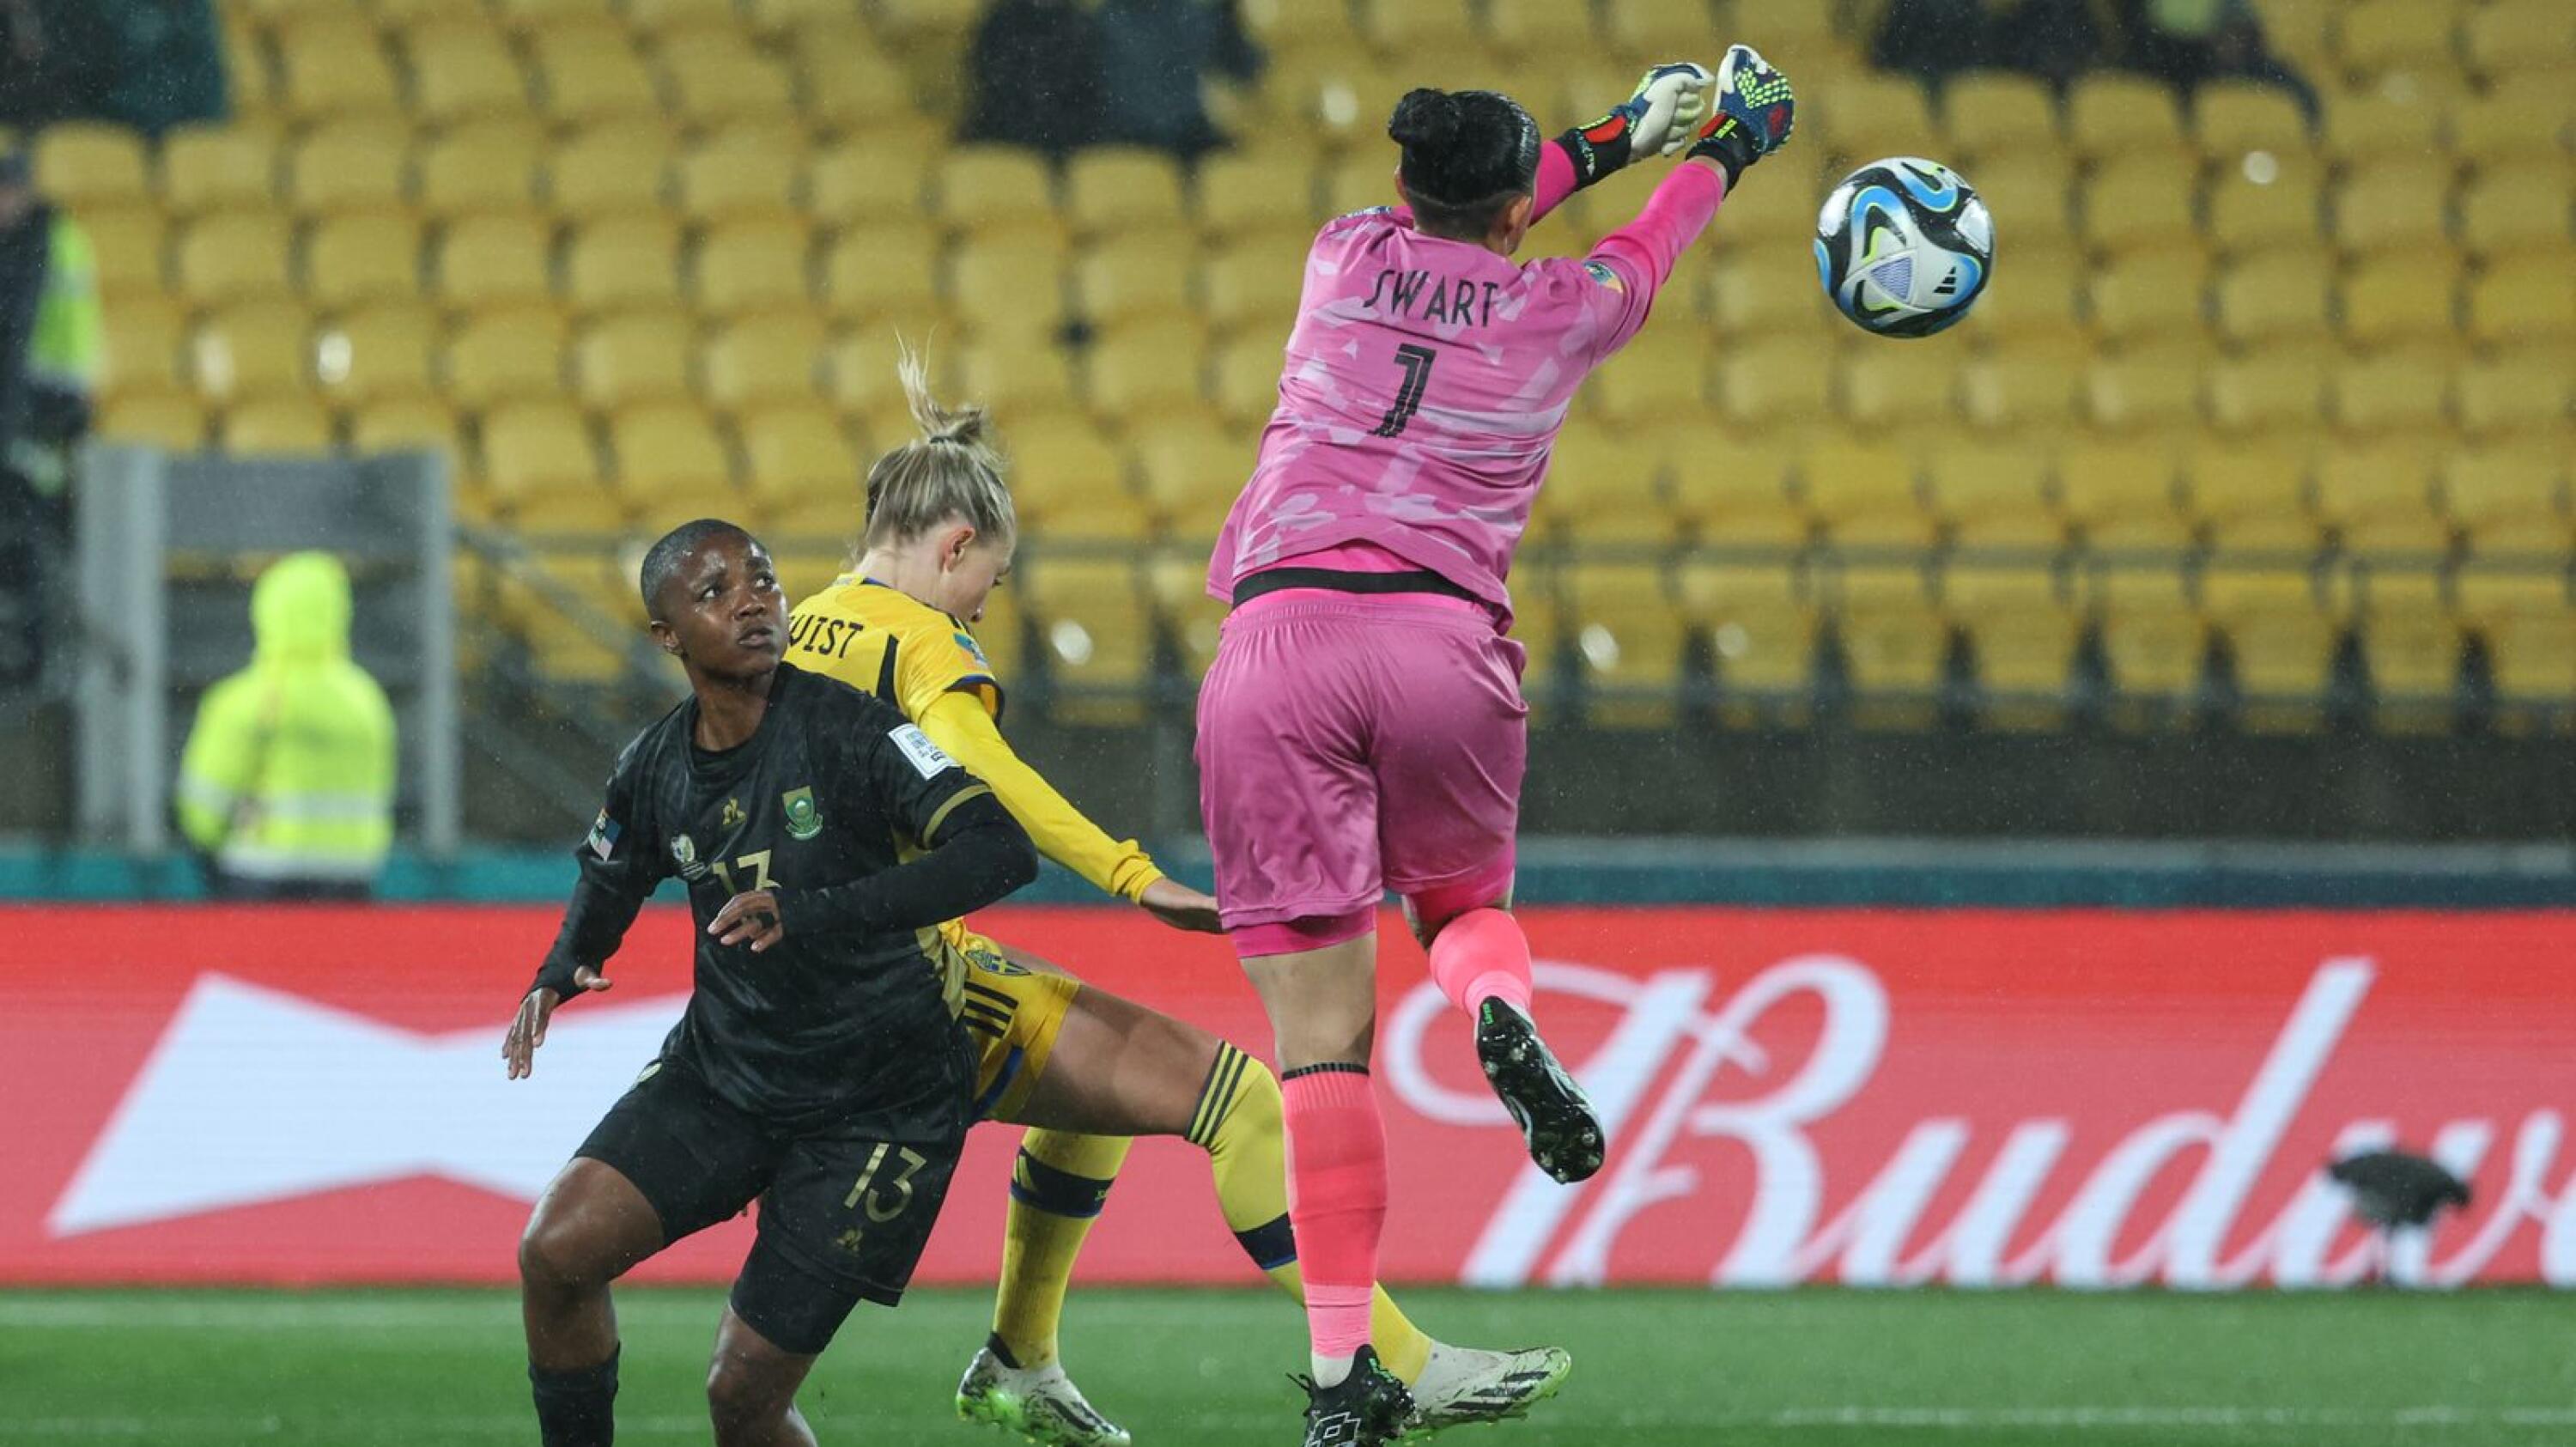 Banyana Banyana’s goalkeeper Kaylin Swart (R) saves the ball next to defender Bambanani Mbane (L) against Sweden